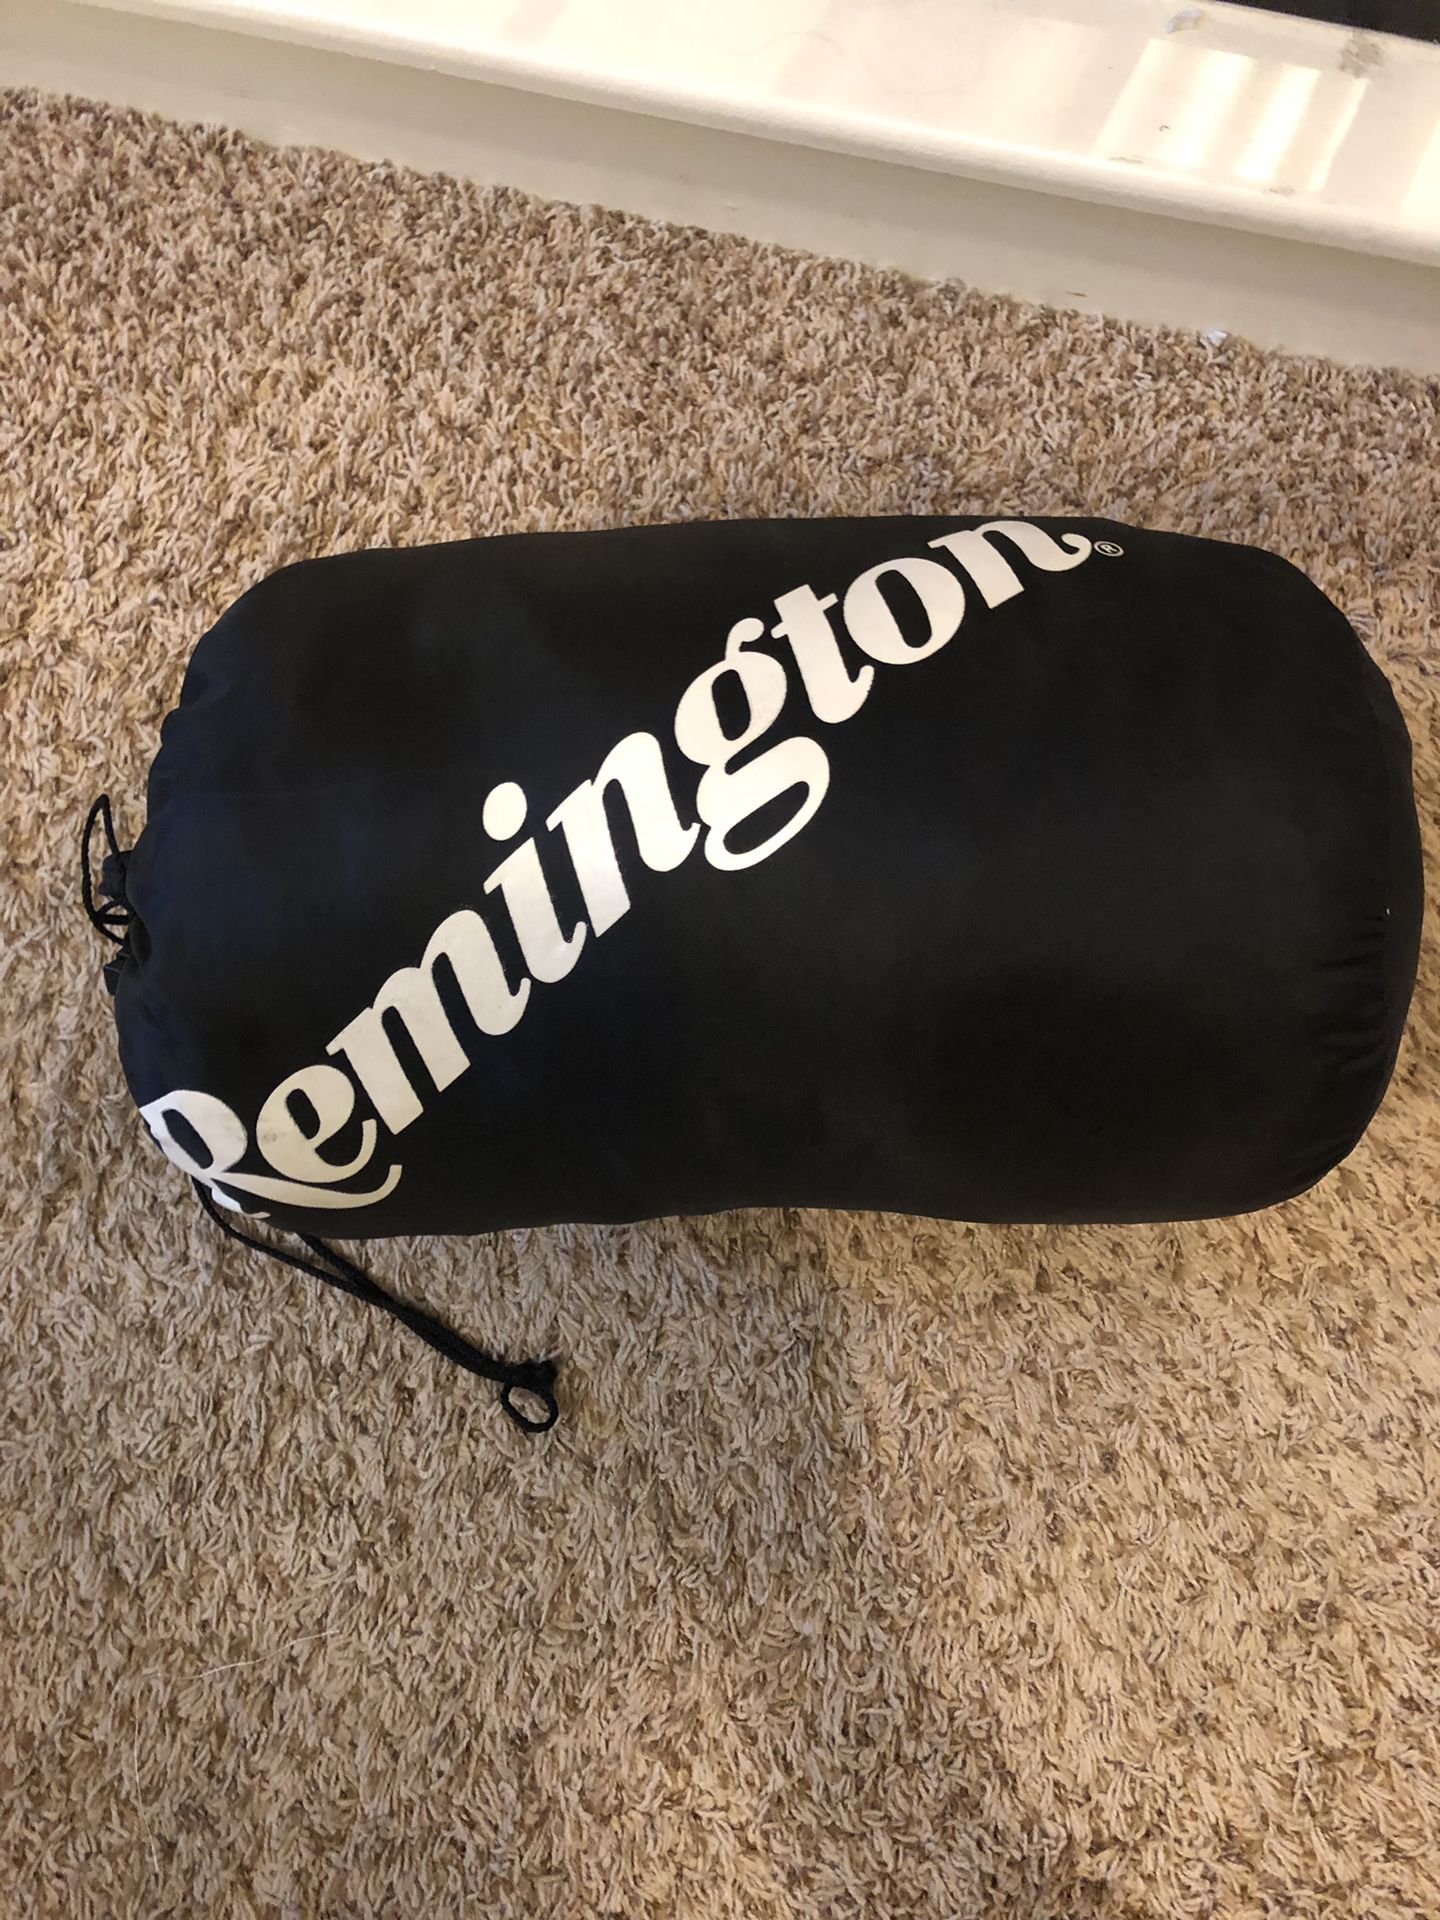 Remington sleeping bag